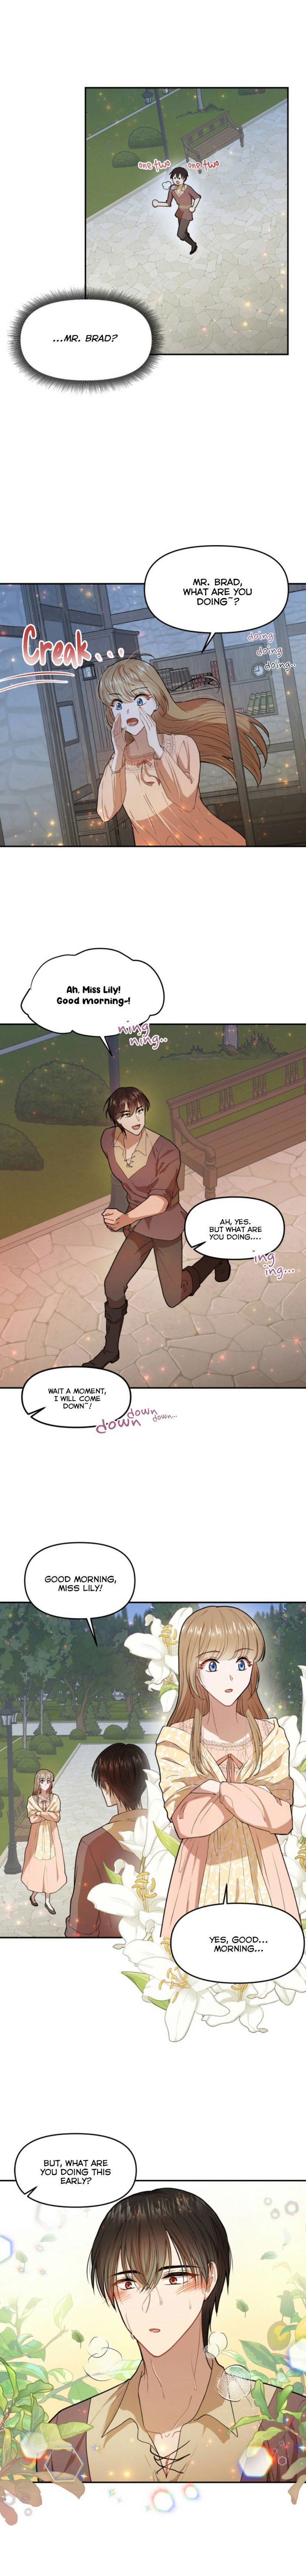 Romance Fantasy Comic Binge Chapter 3 page 7